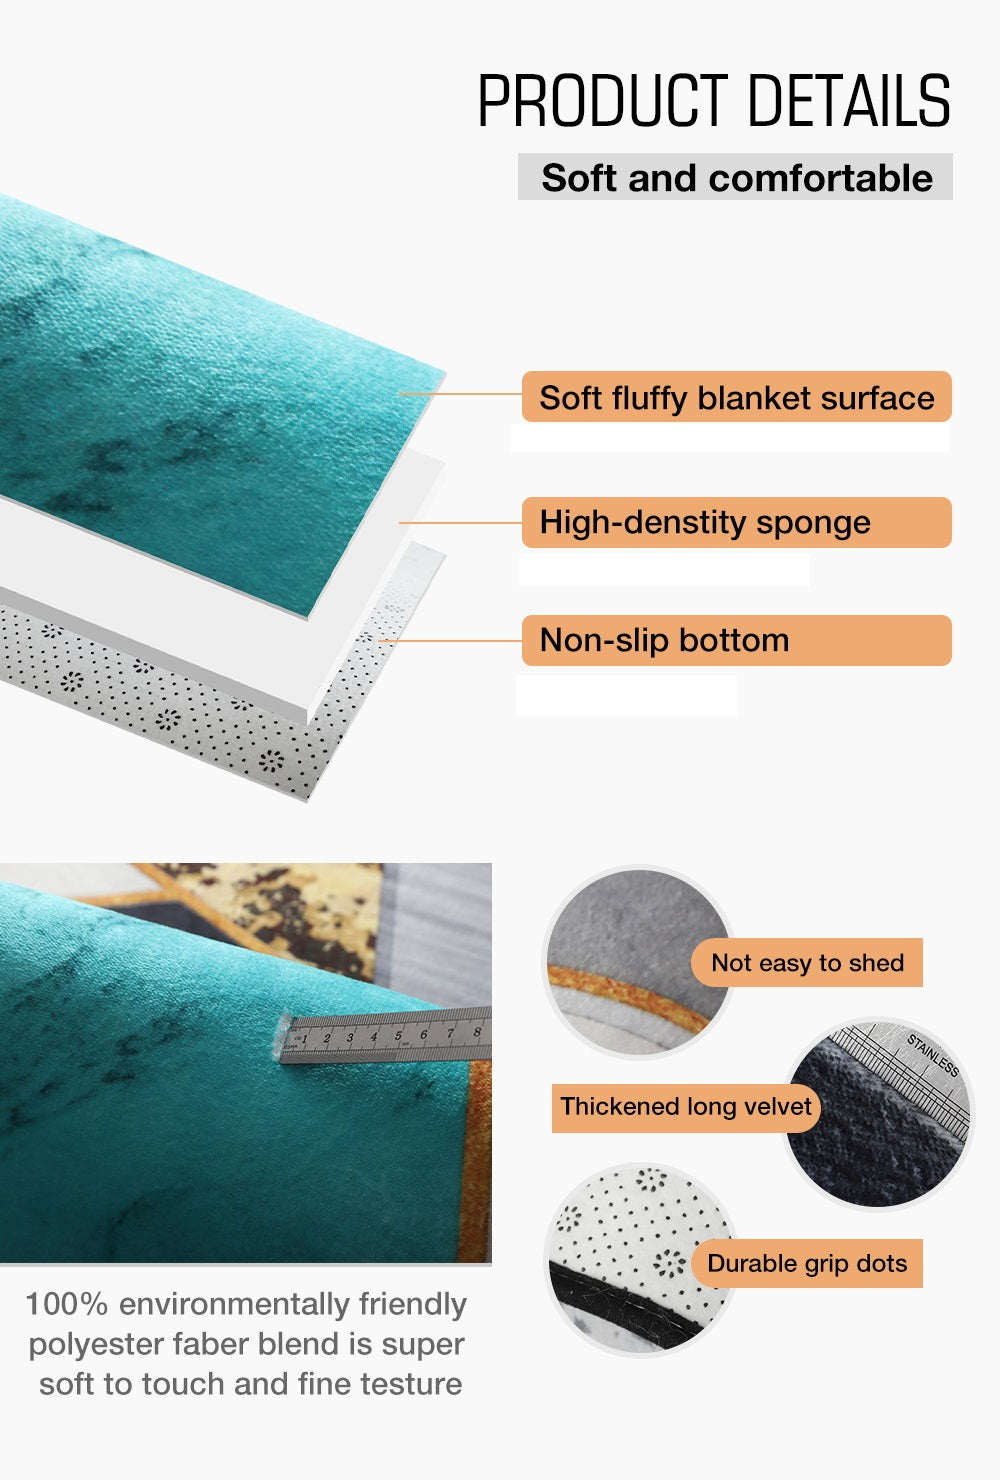 Black Grey Marble Geometric Carpet for Living Room | Plush Area Rug